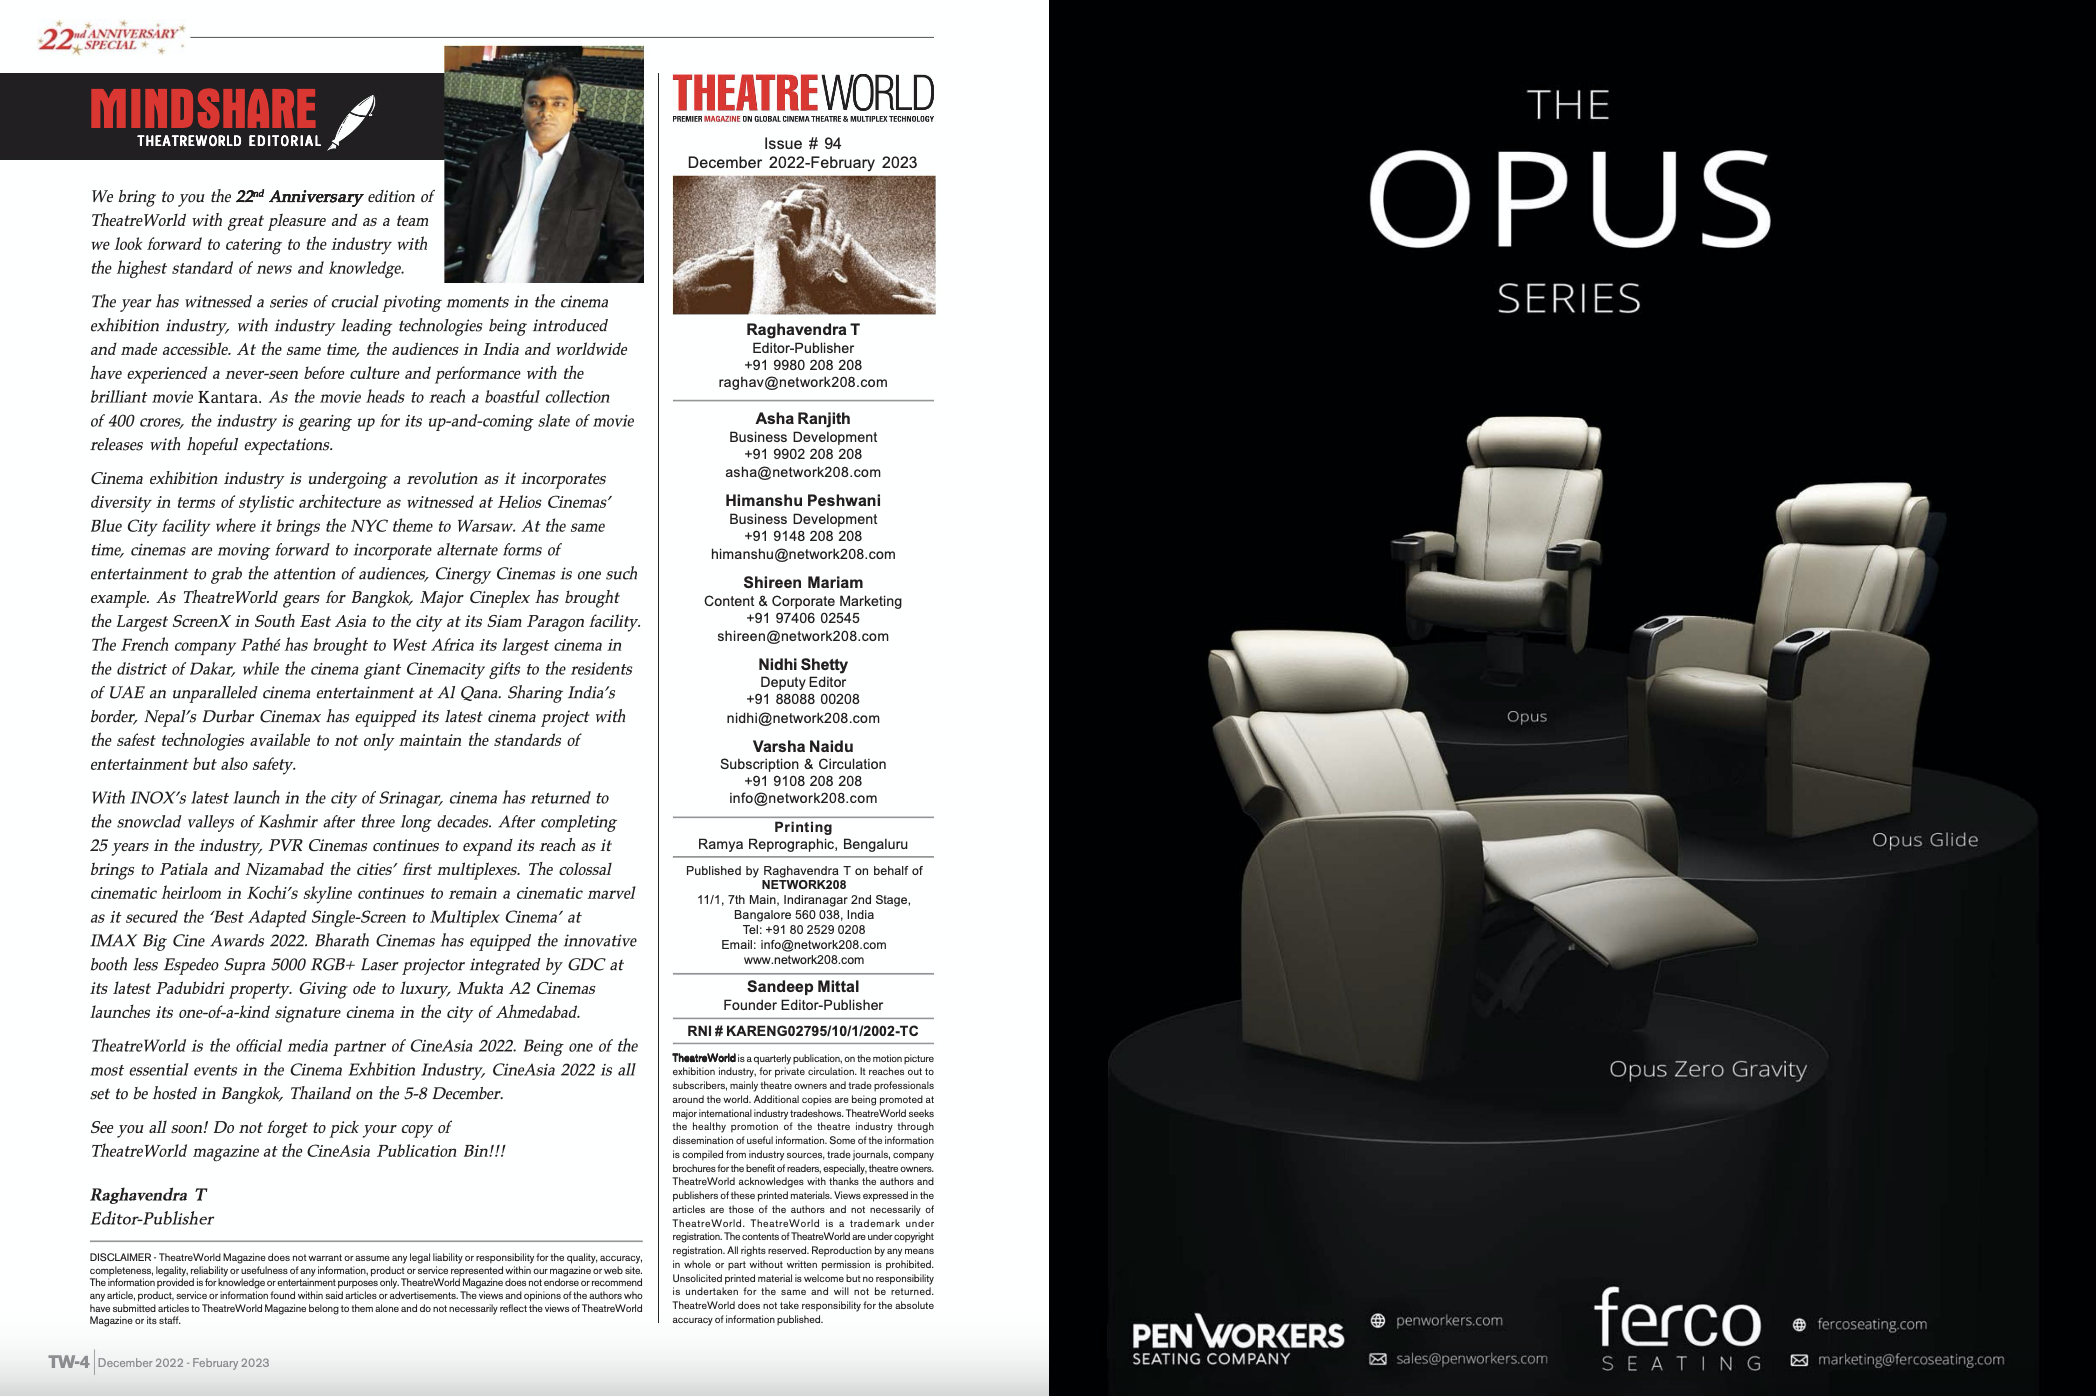 La butaca Opus de Ferco aparece en la revista Theatre World Magazine